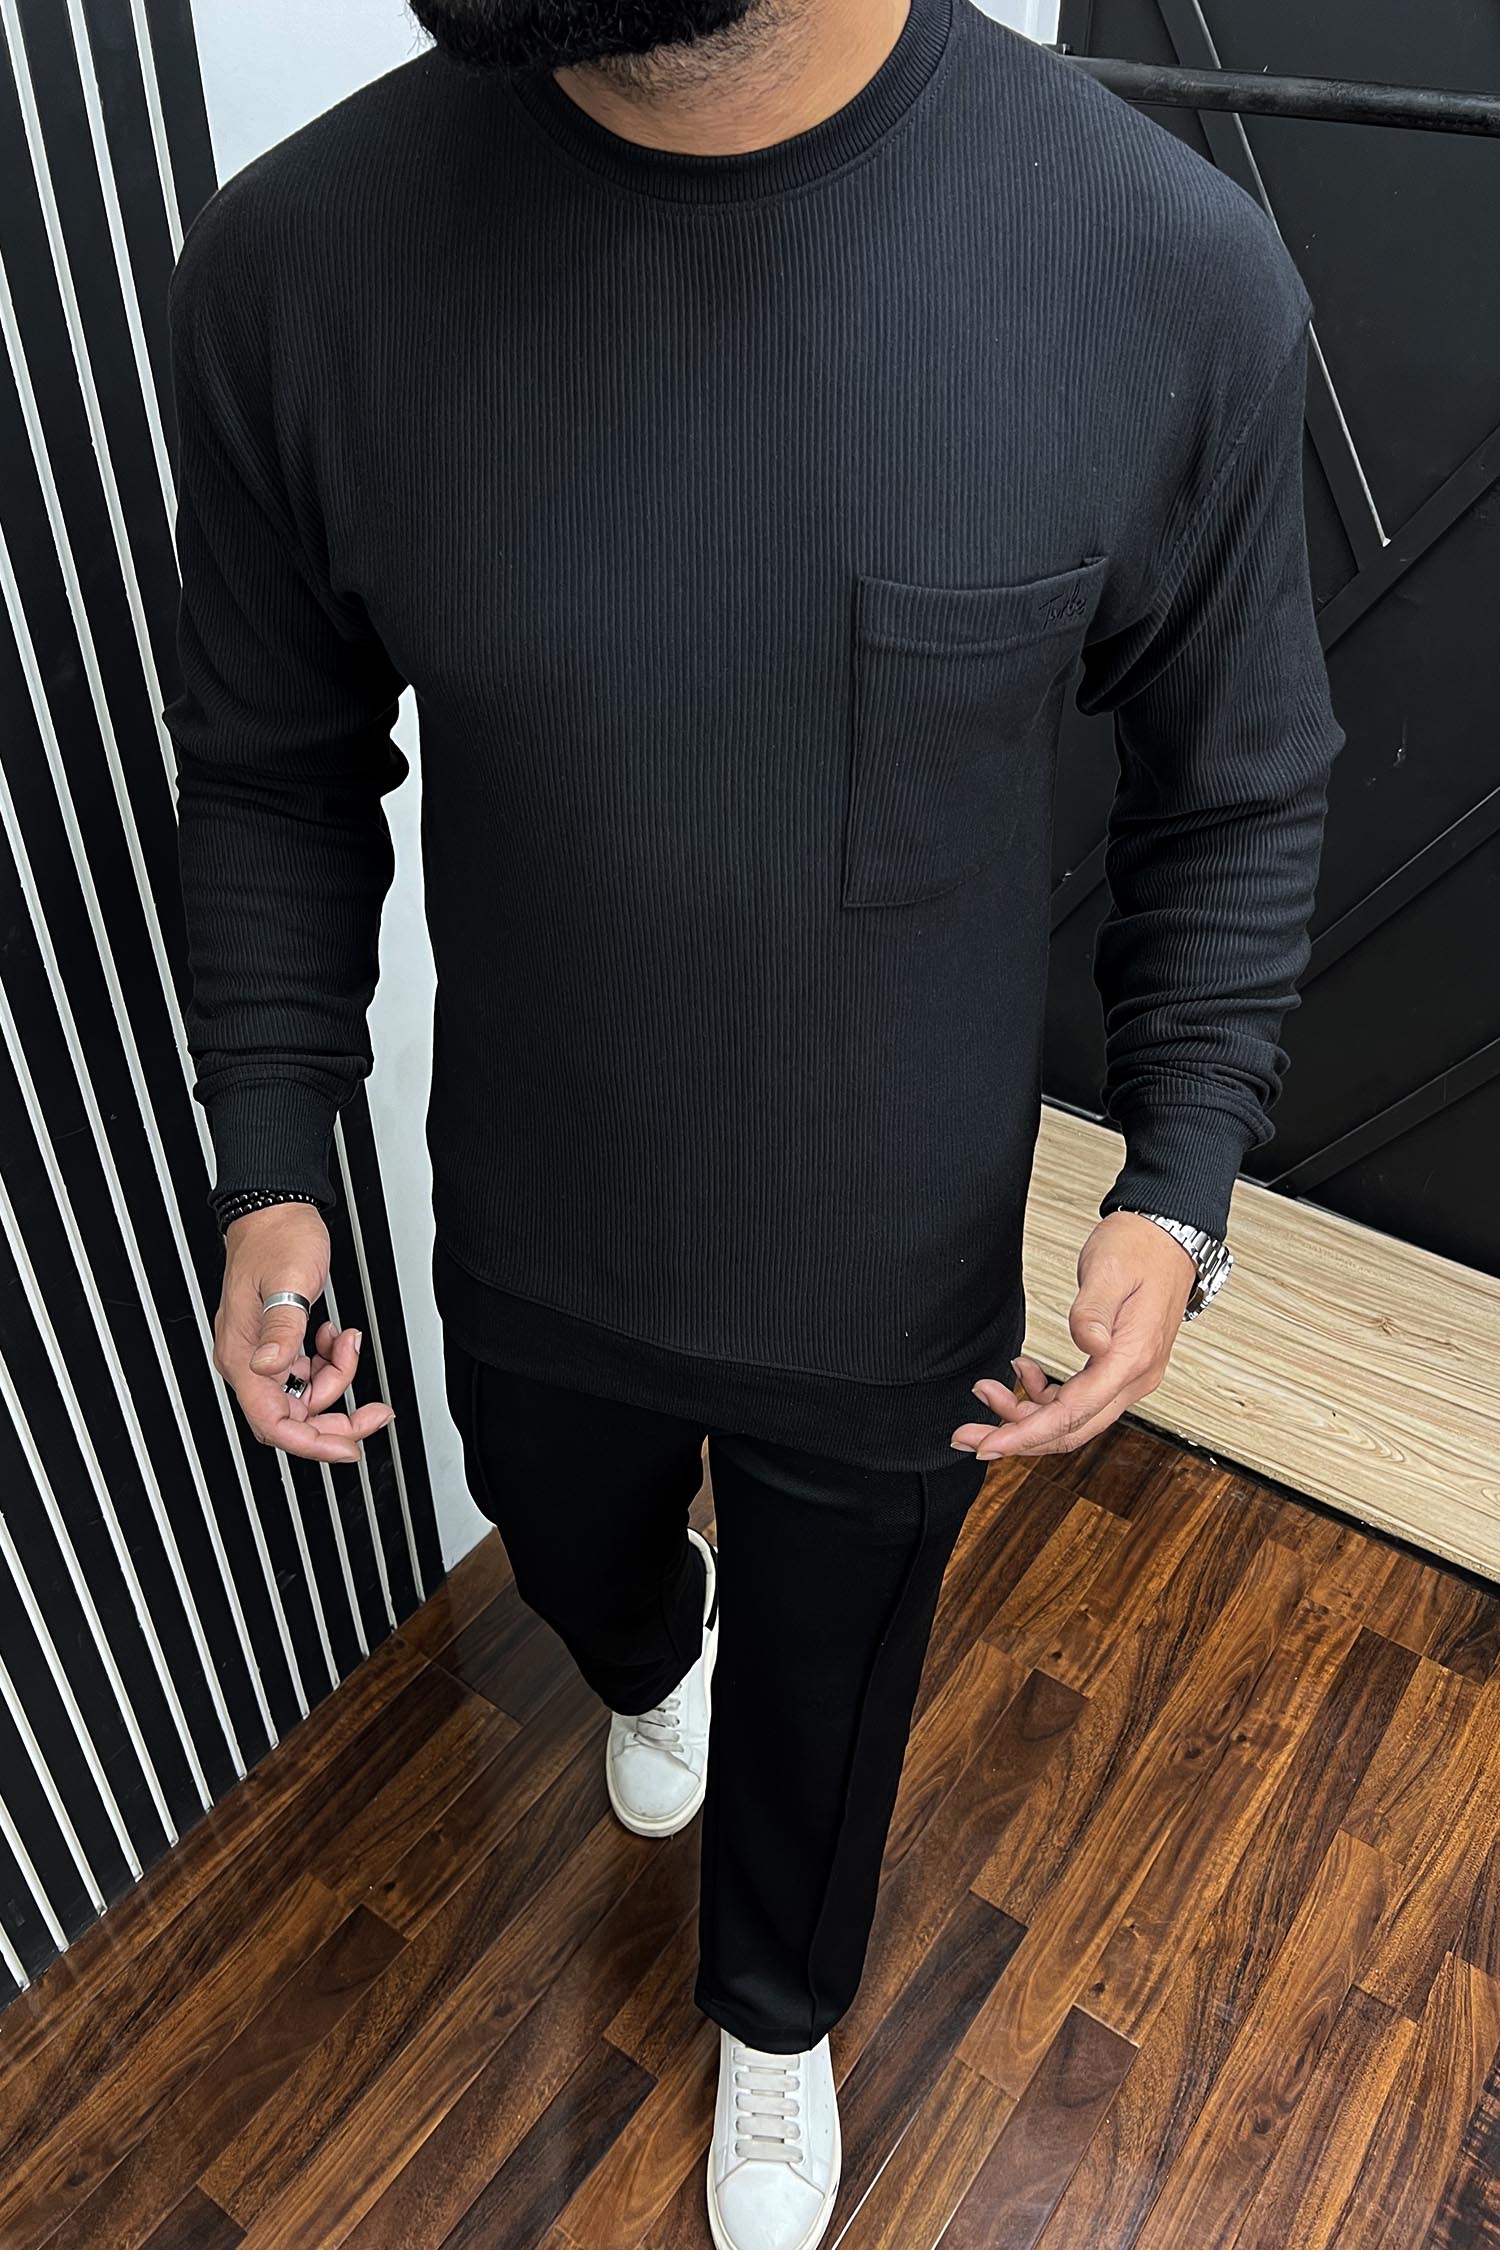 Turbo Pocket Style Embroided Men's Sweatshirt In Black